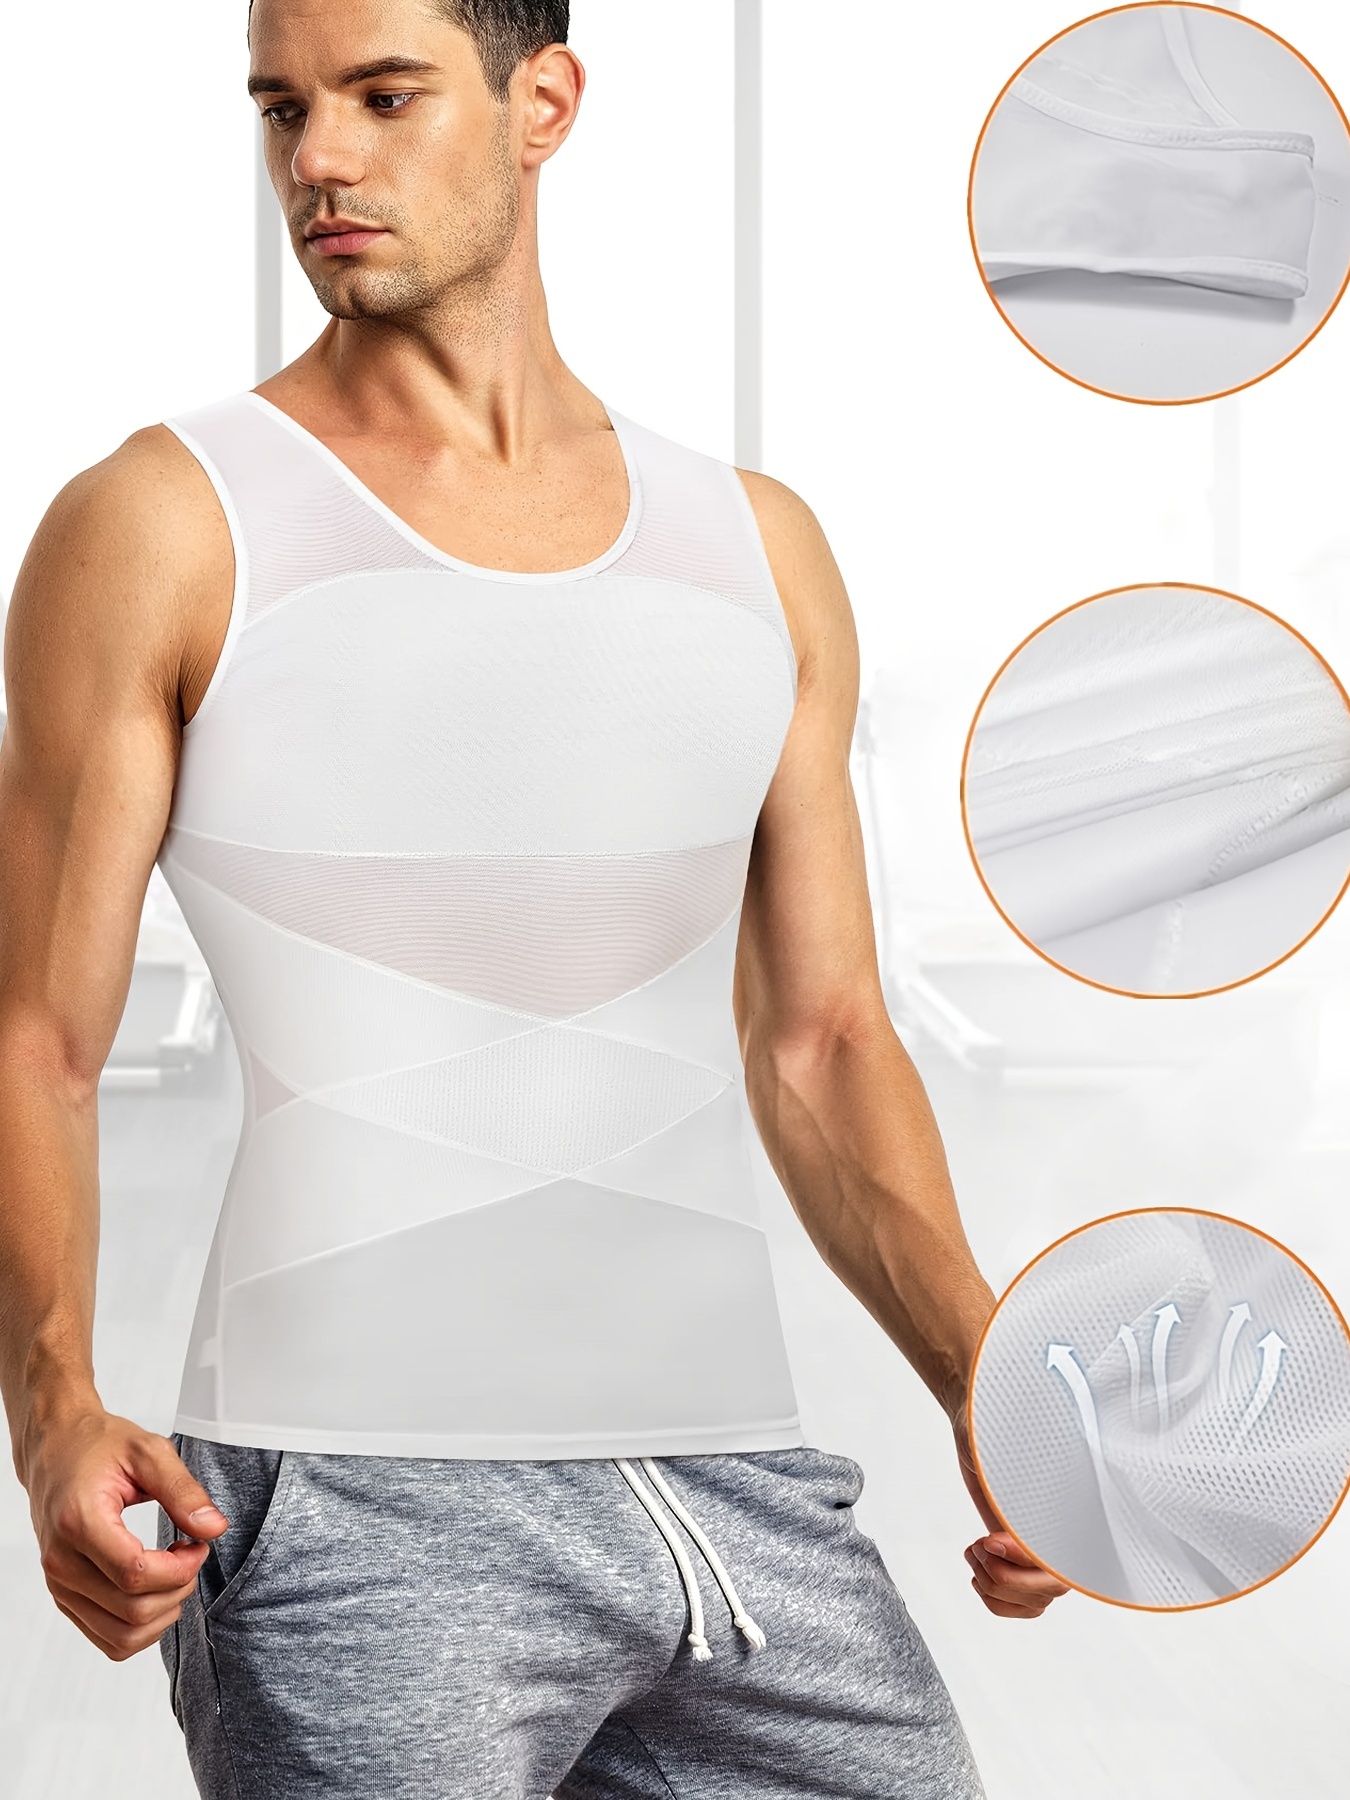 Aptoco Mens Compression Shirts Body Shaper Vest Abs Abdomen Slim Tank  Elastic Top Undershirt, Whtie, Christmas Gifts 